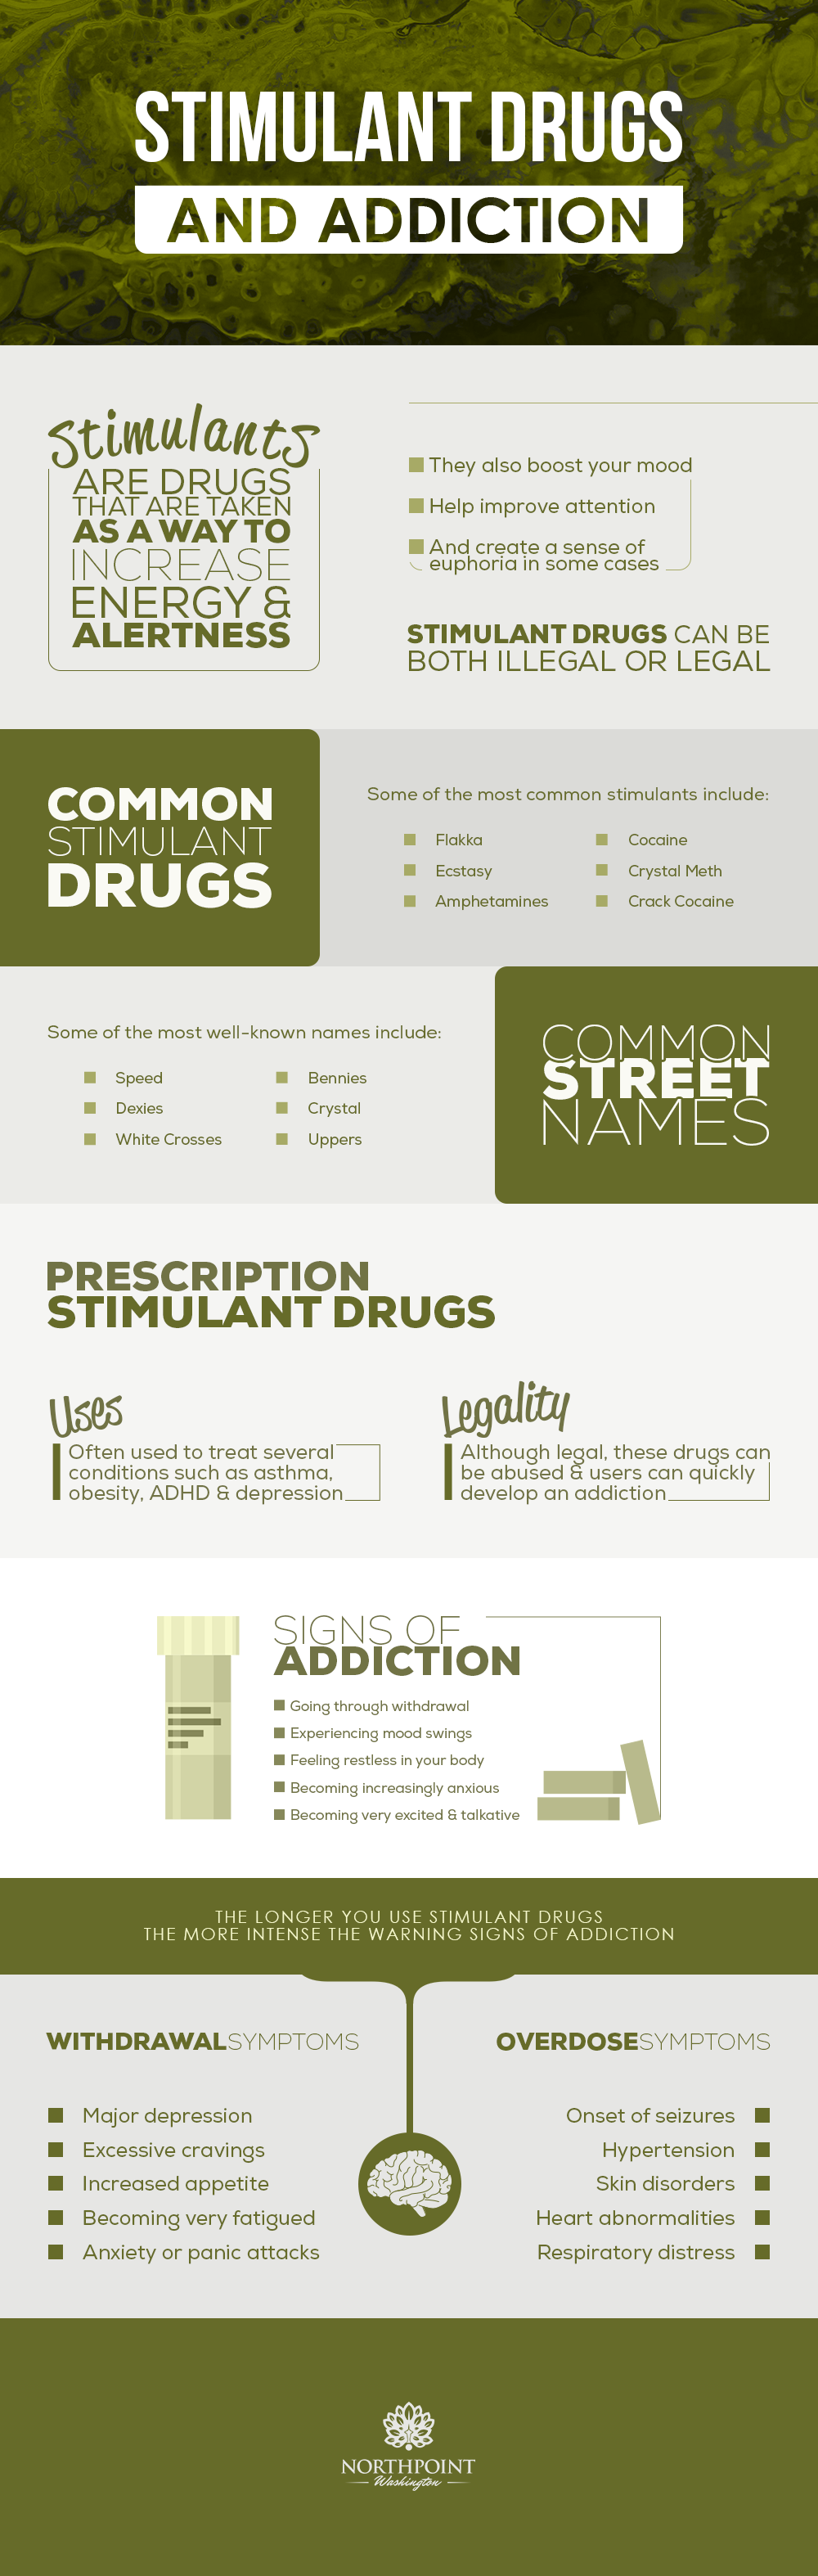 prescription stimulant drugs infographic